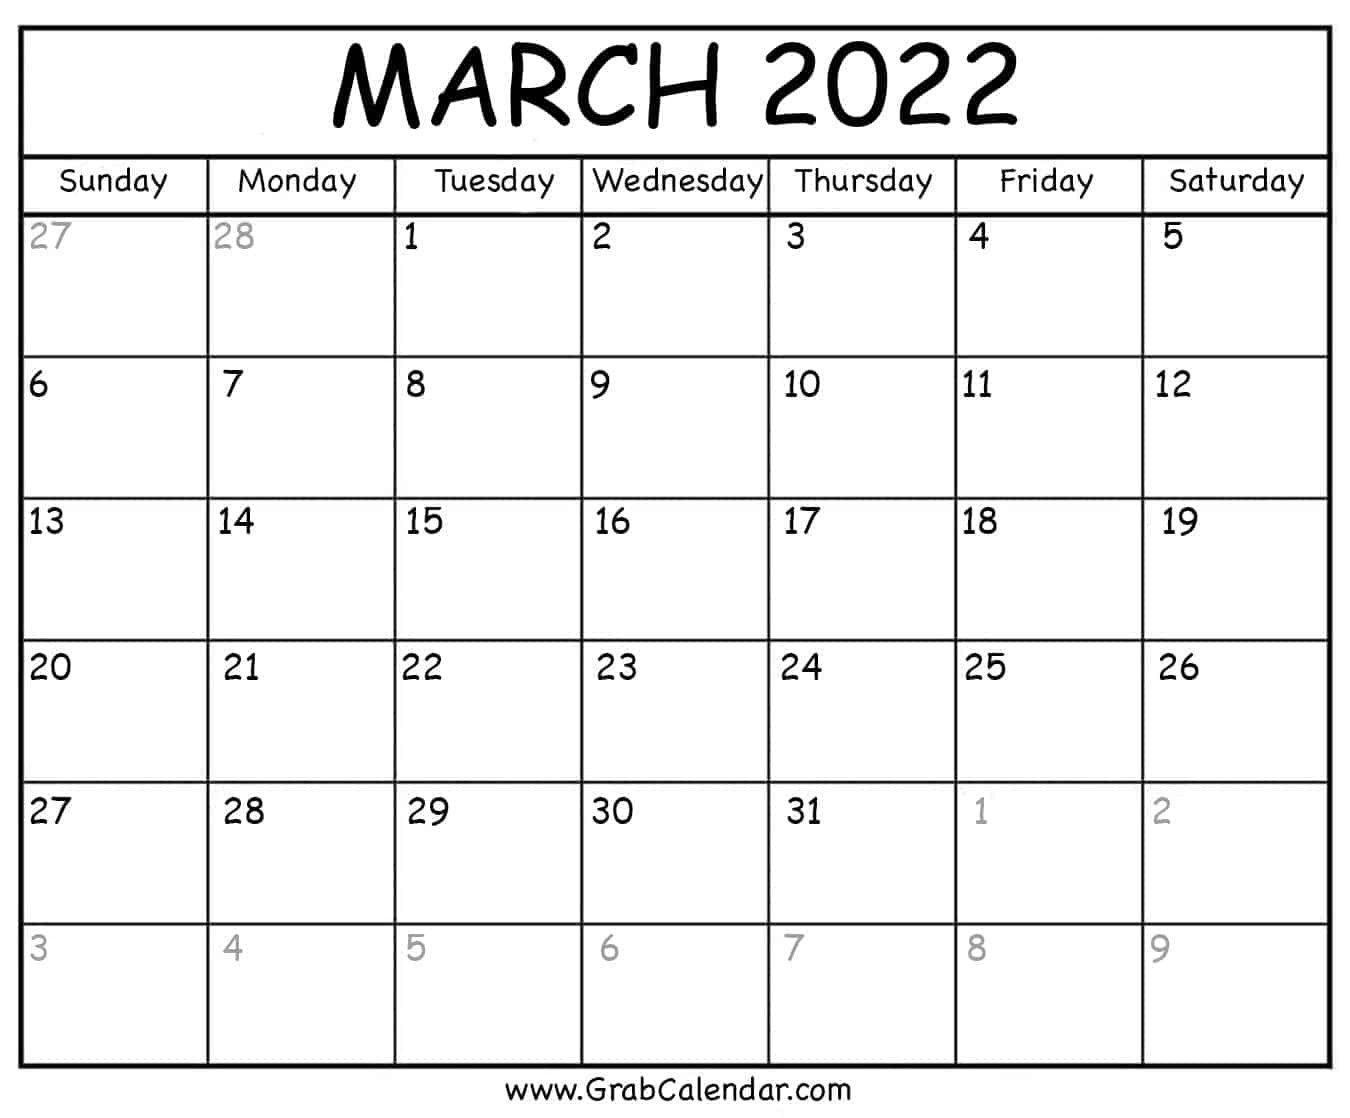 March 2022 Blank Calendar Printable March 2022 Calendar